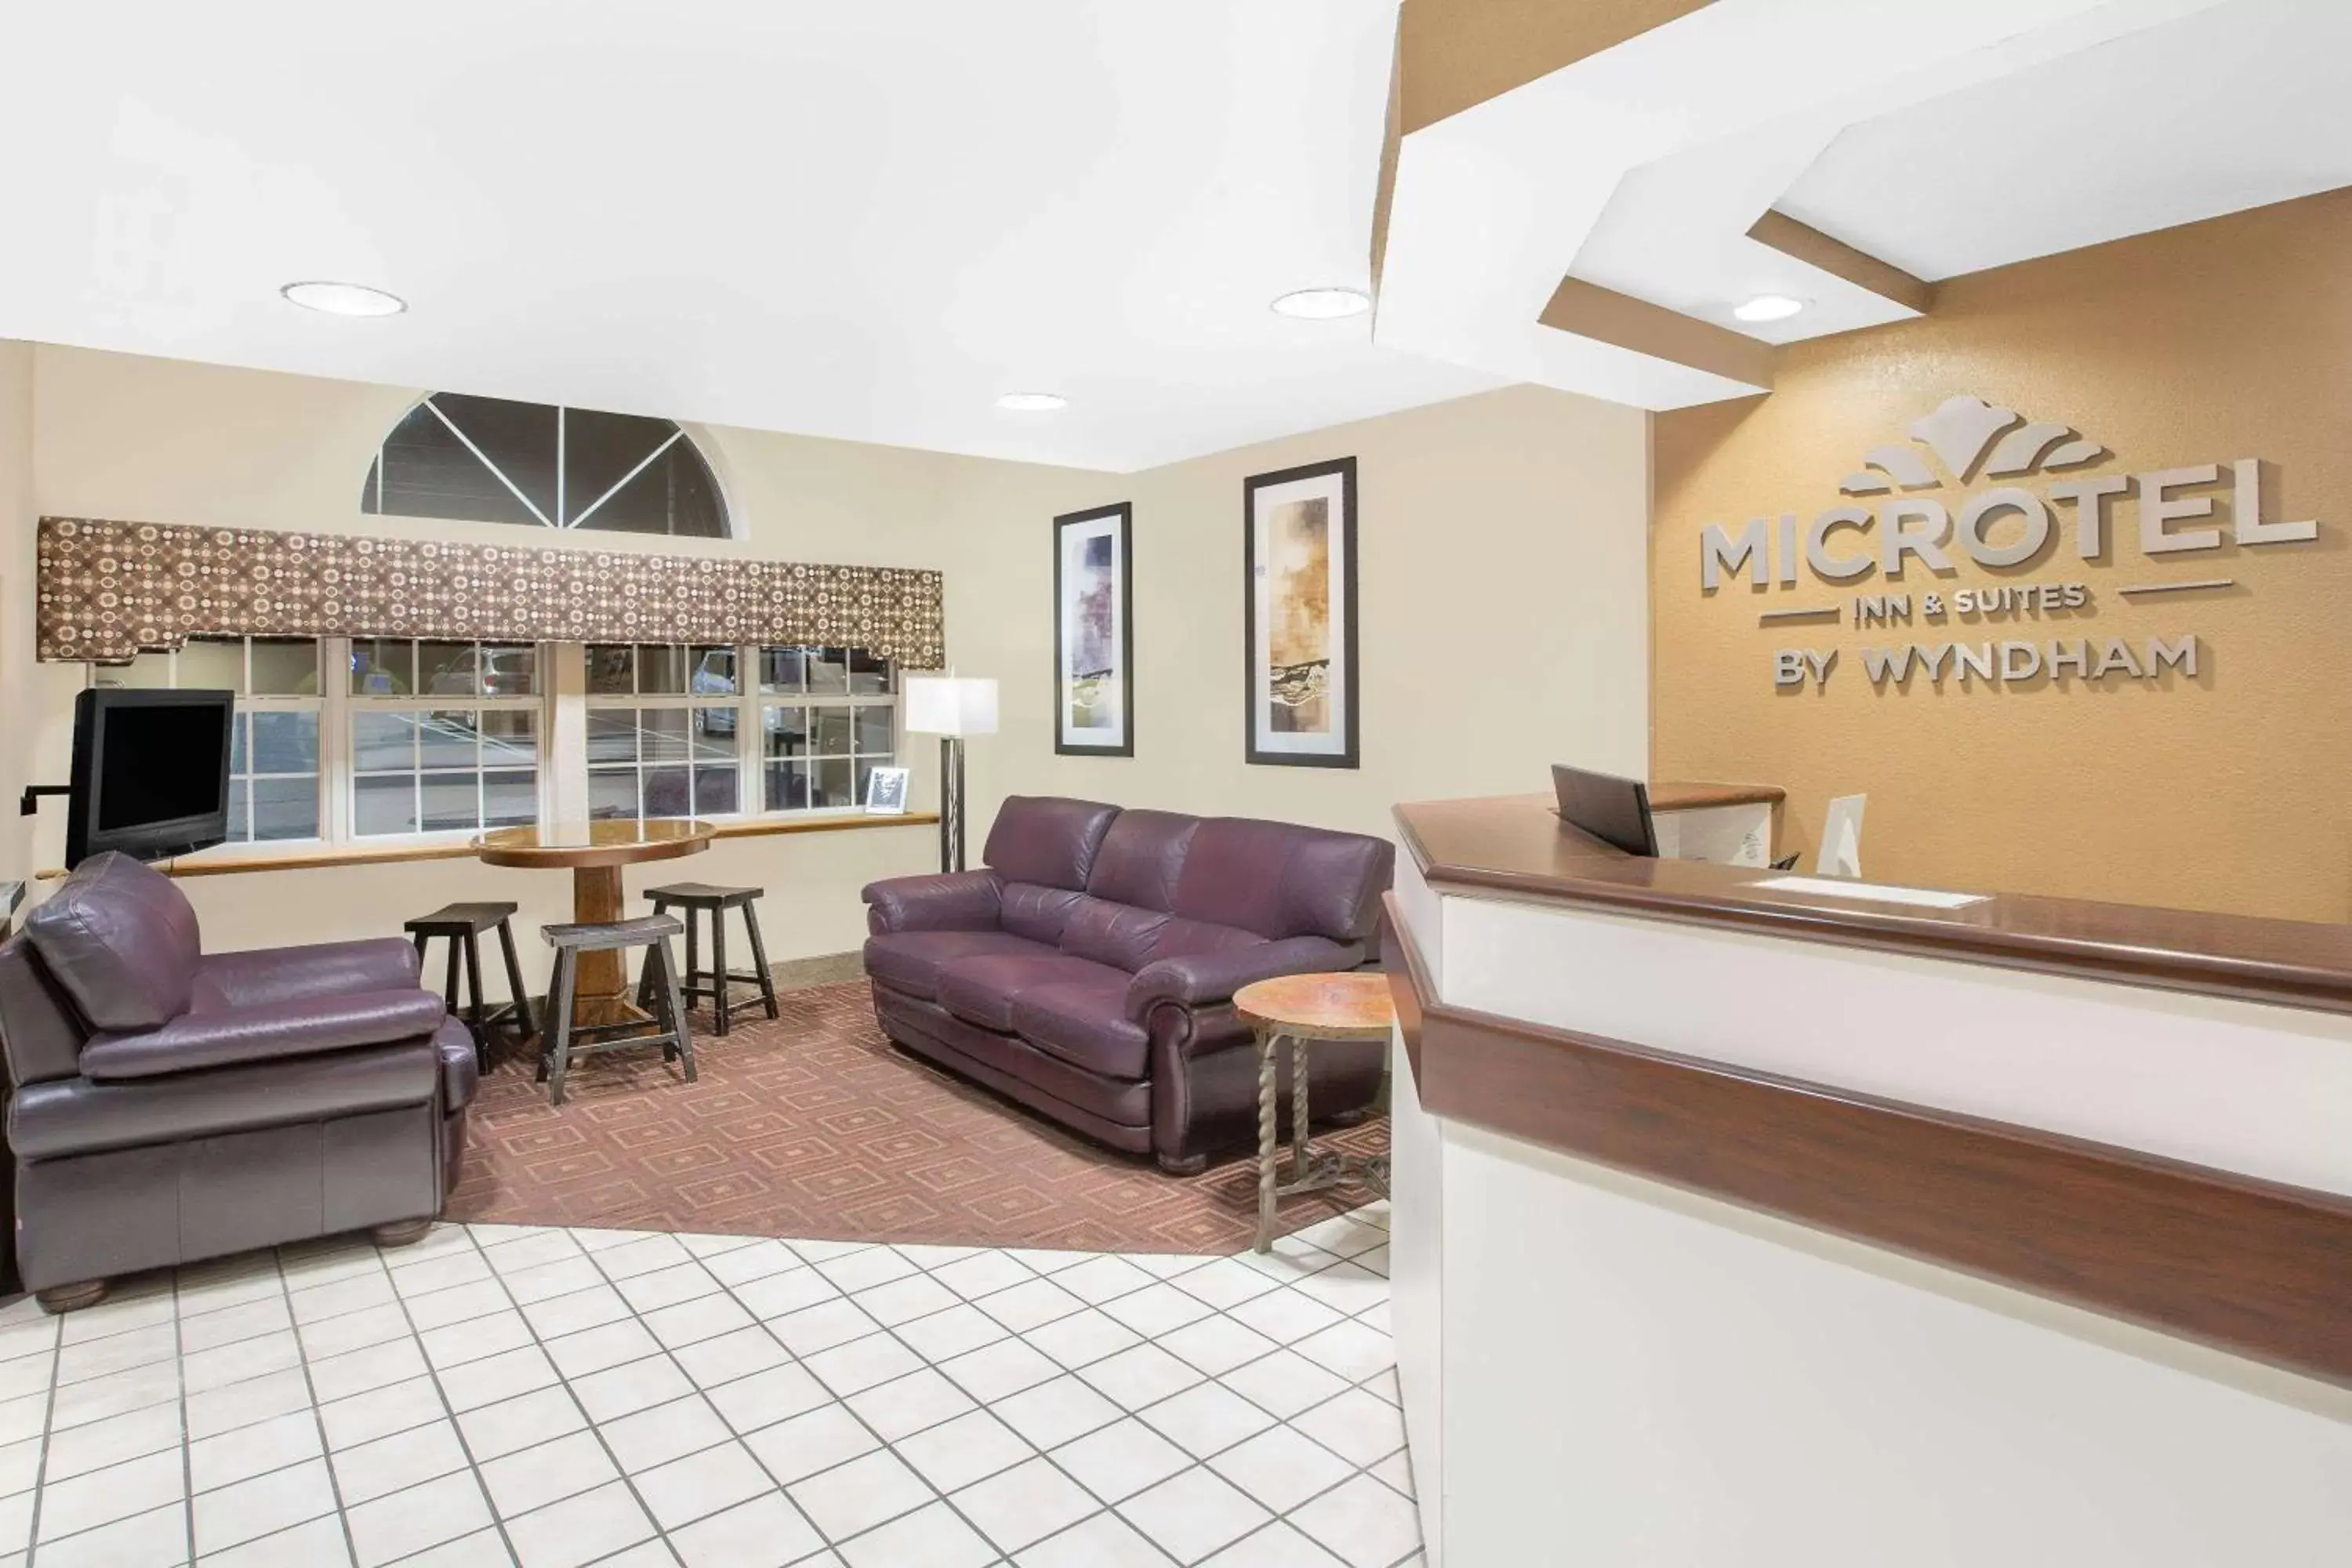 Lobby or reception in Microtel Inn & Suites by Wyndham Franklin